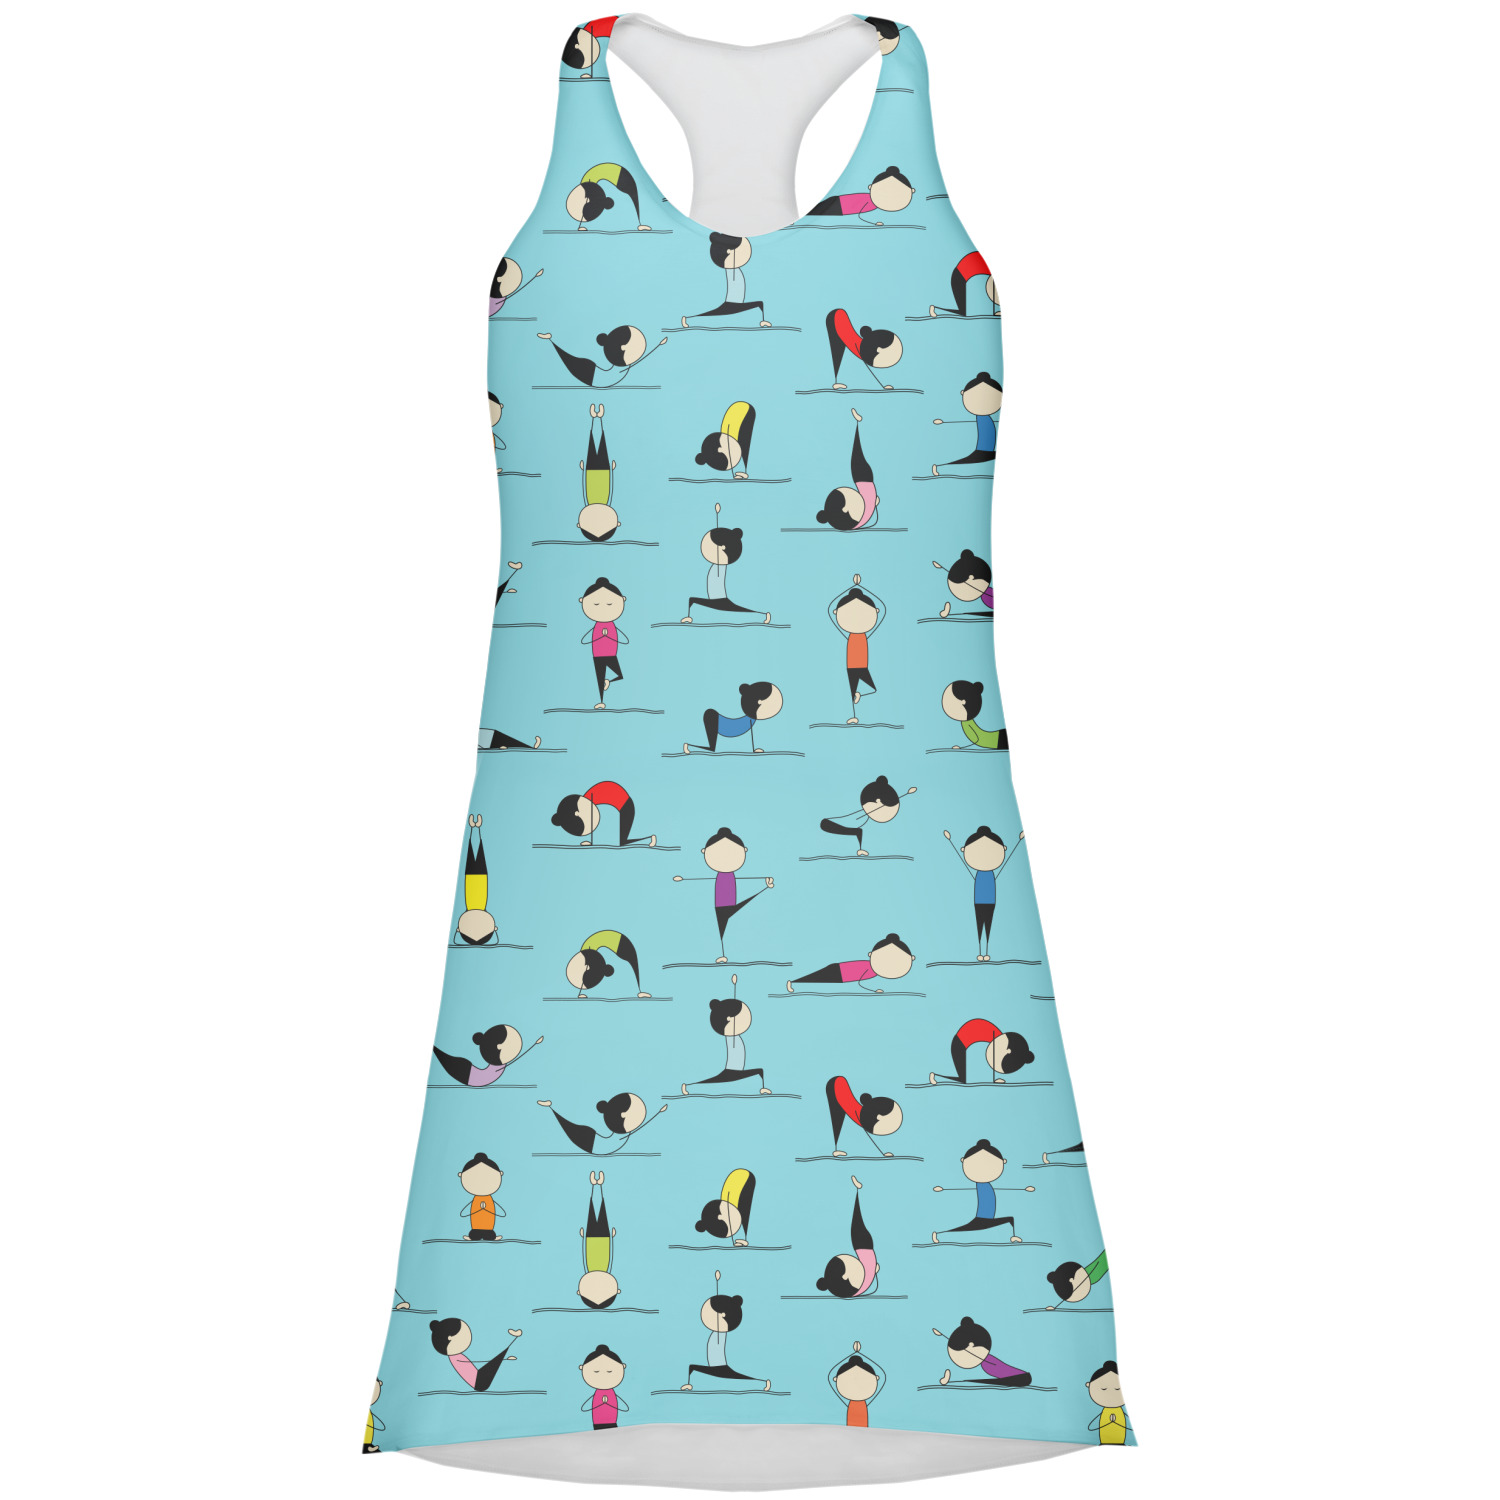 https://www.youcustomizeit.com/common/MAKE/284283/Yoga-Poses-Racerback-Dress-Front.jpg?lm=1573053537